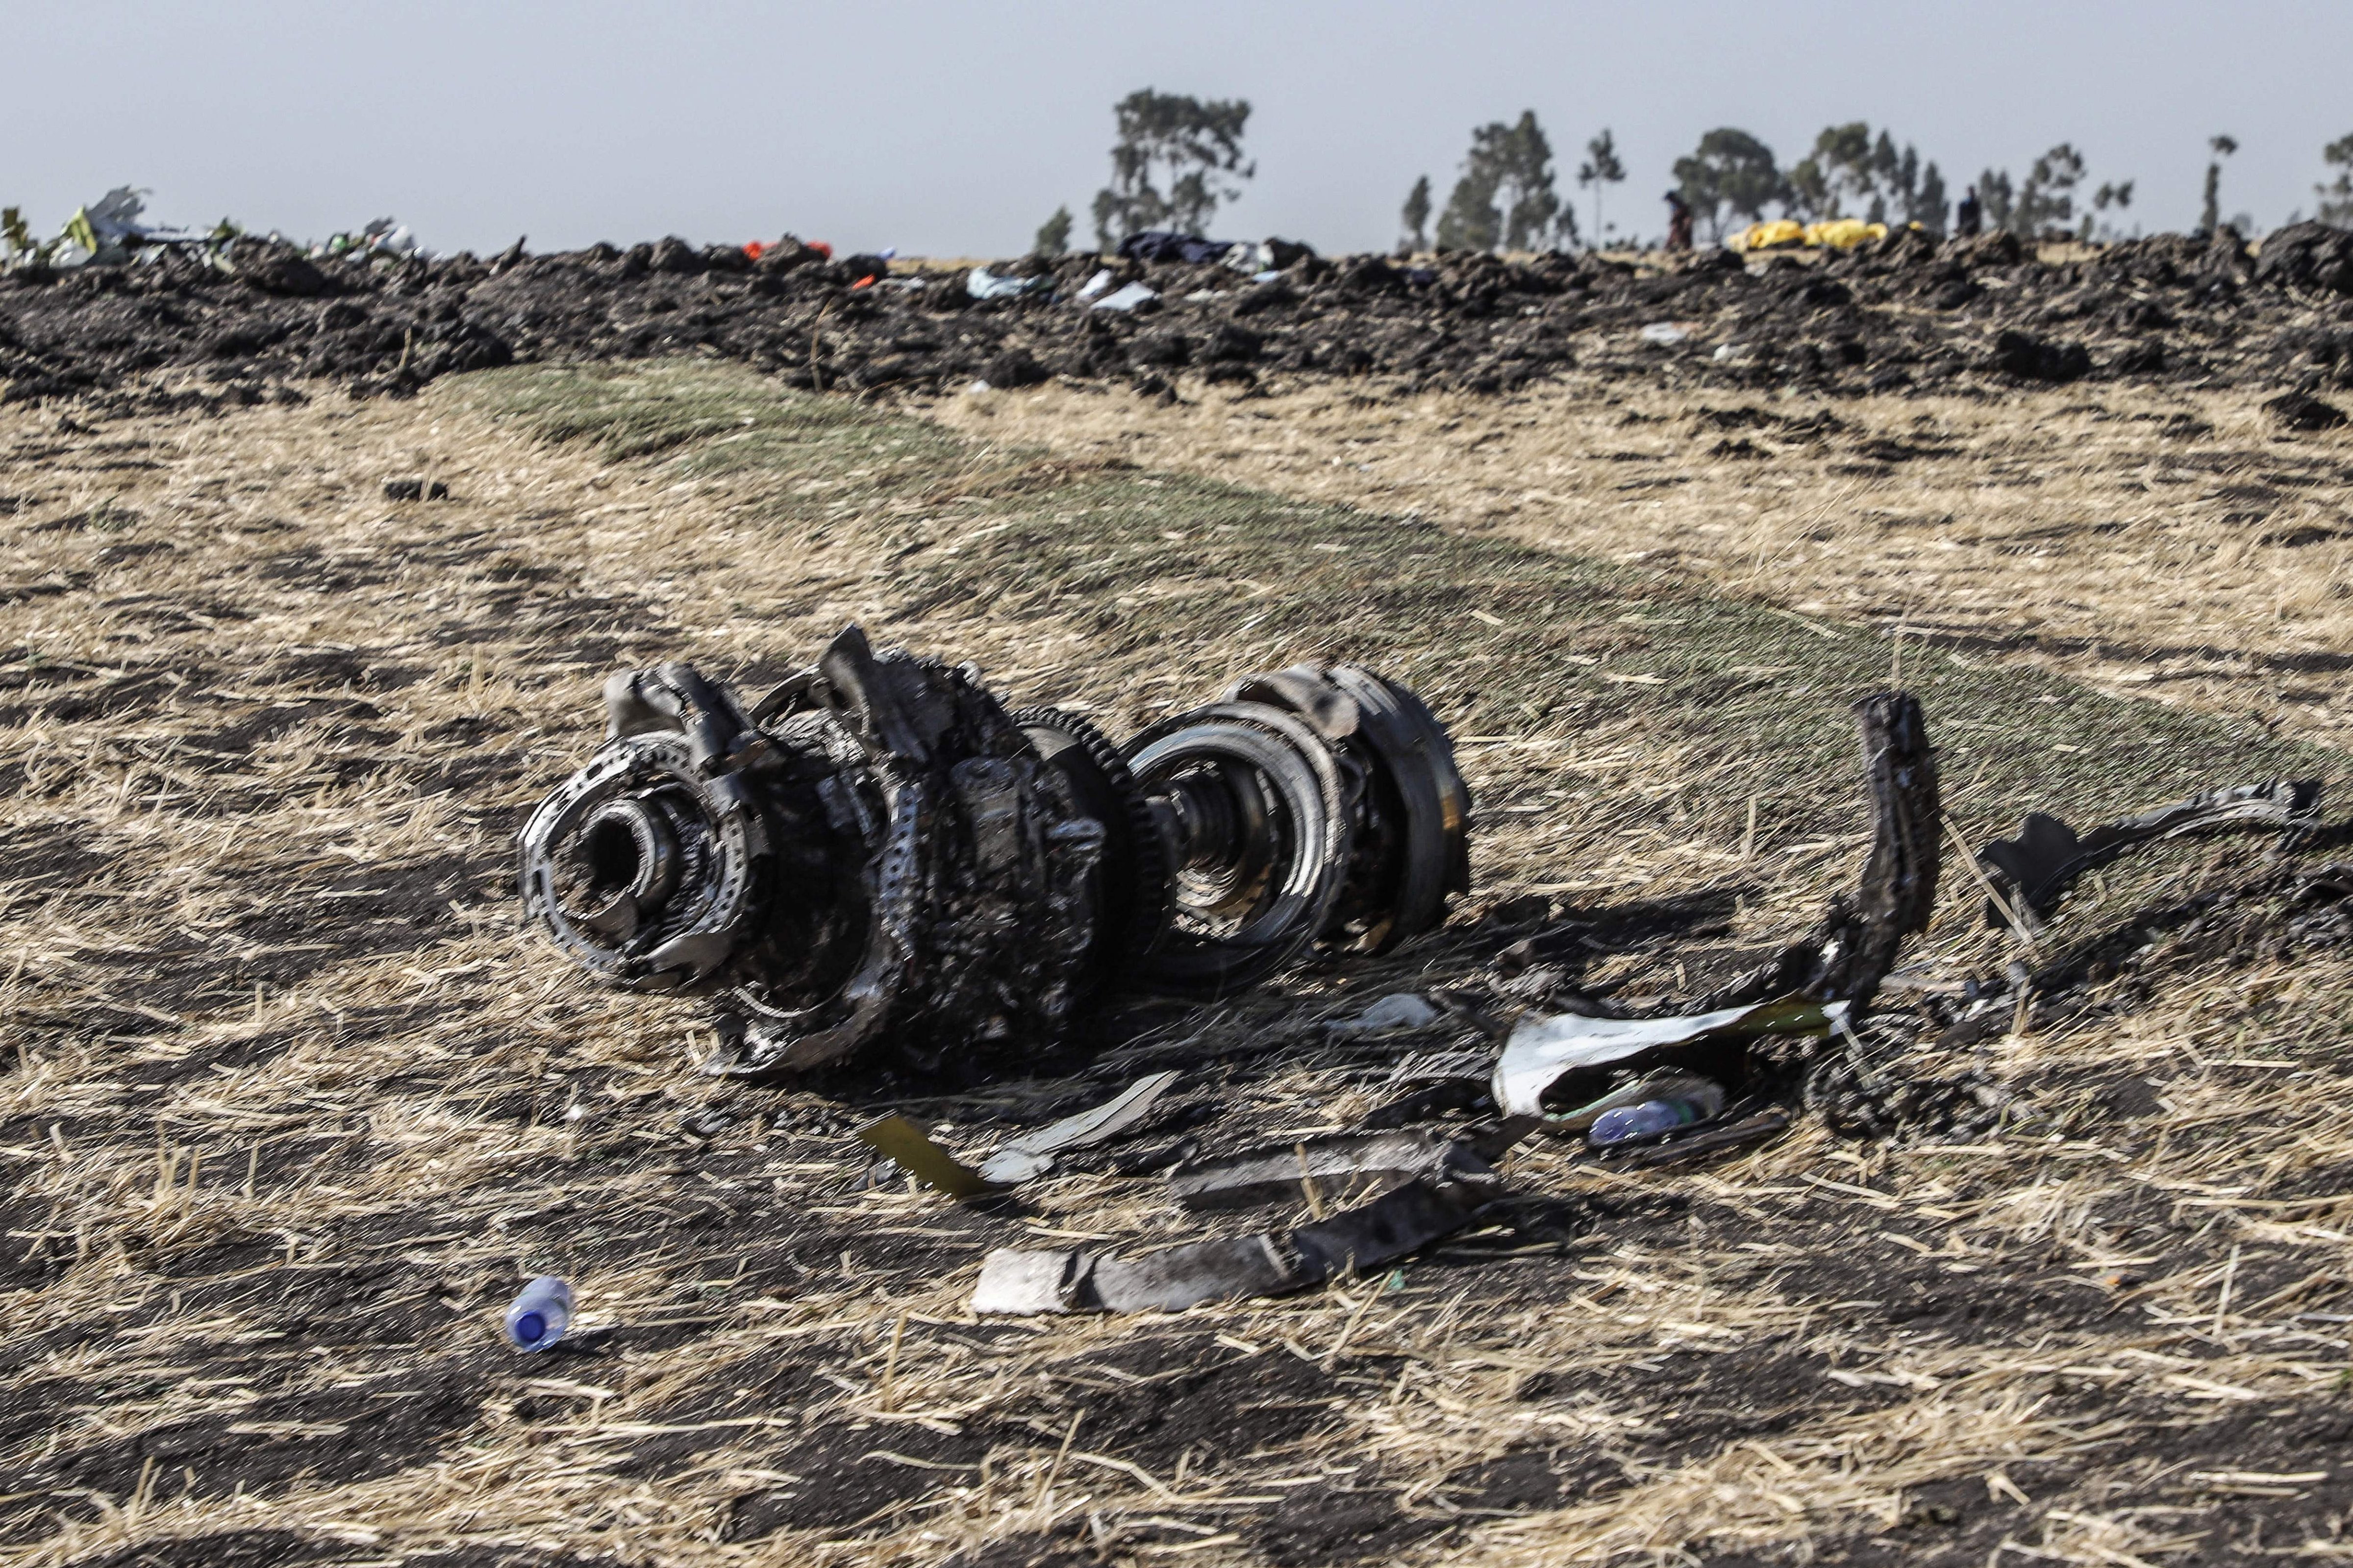 Ethiopia-Airlines-Flight-302-wreckage.jpg